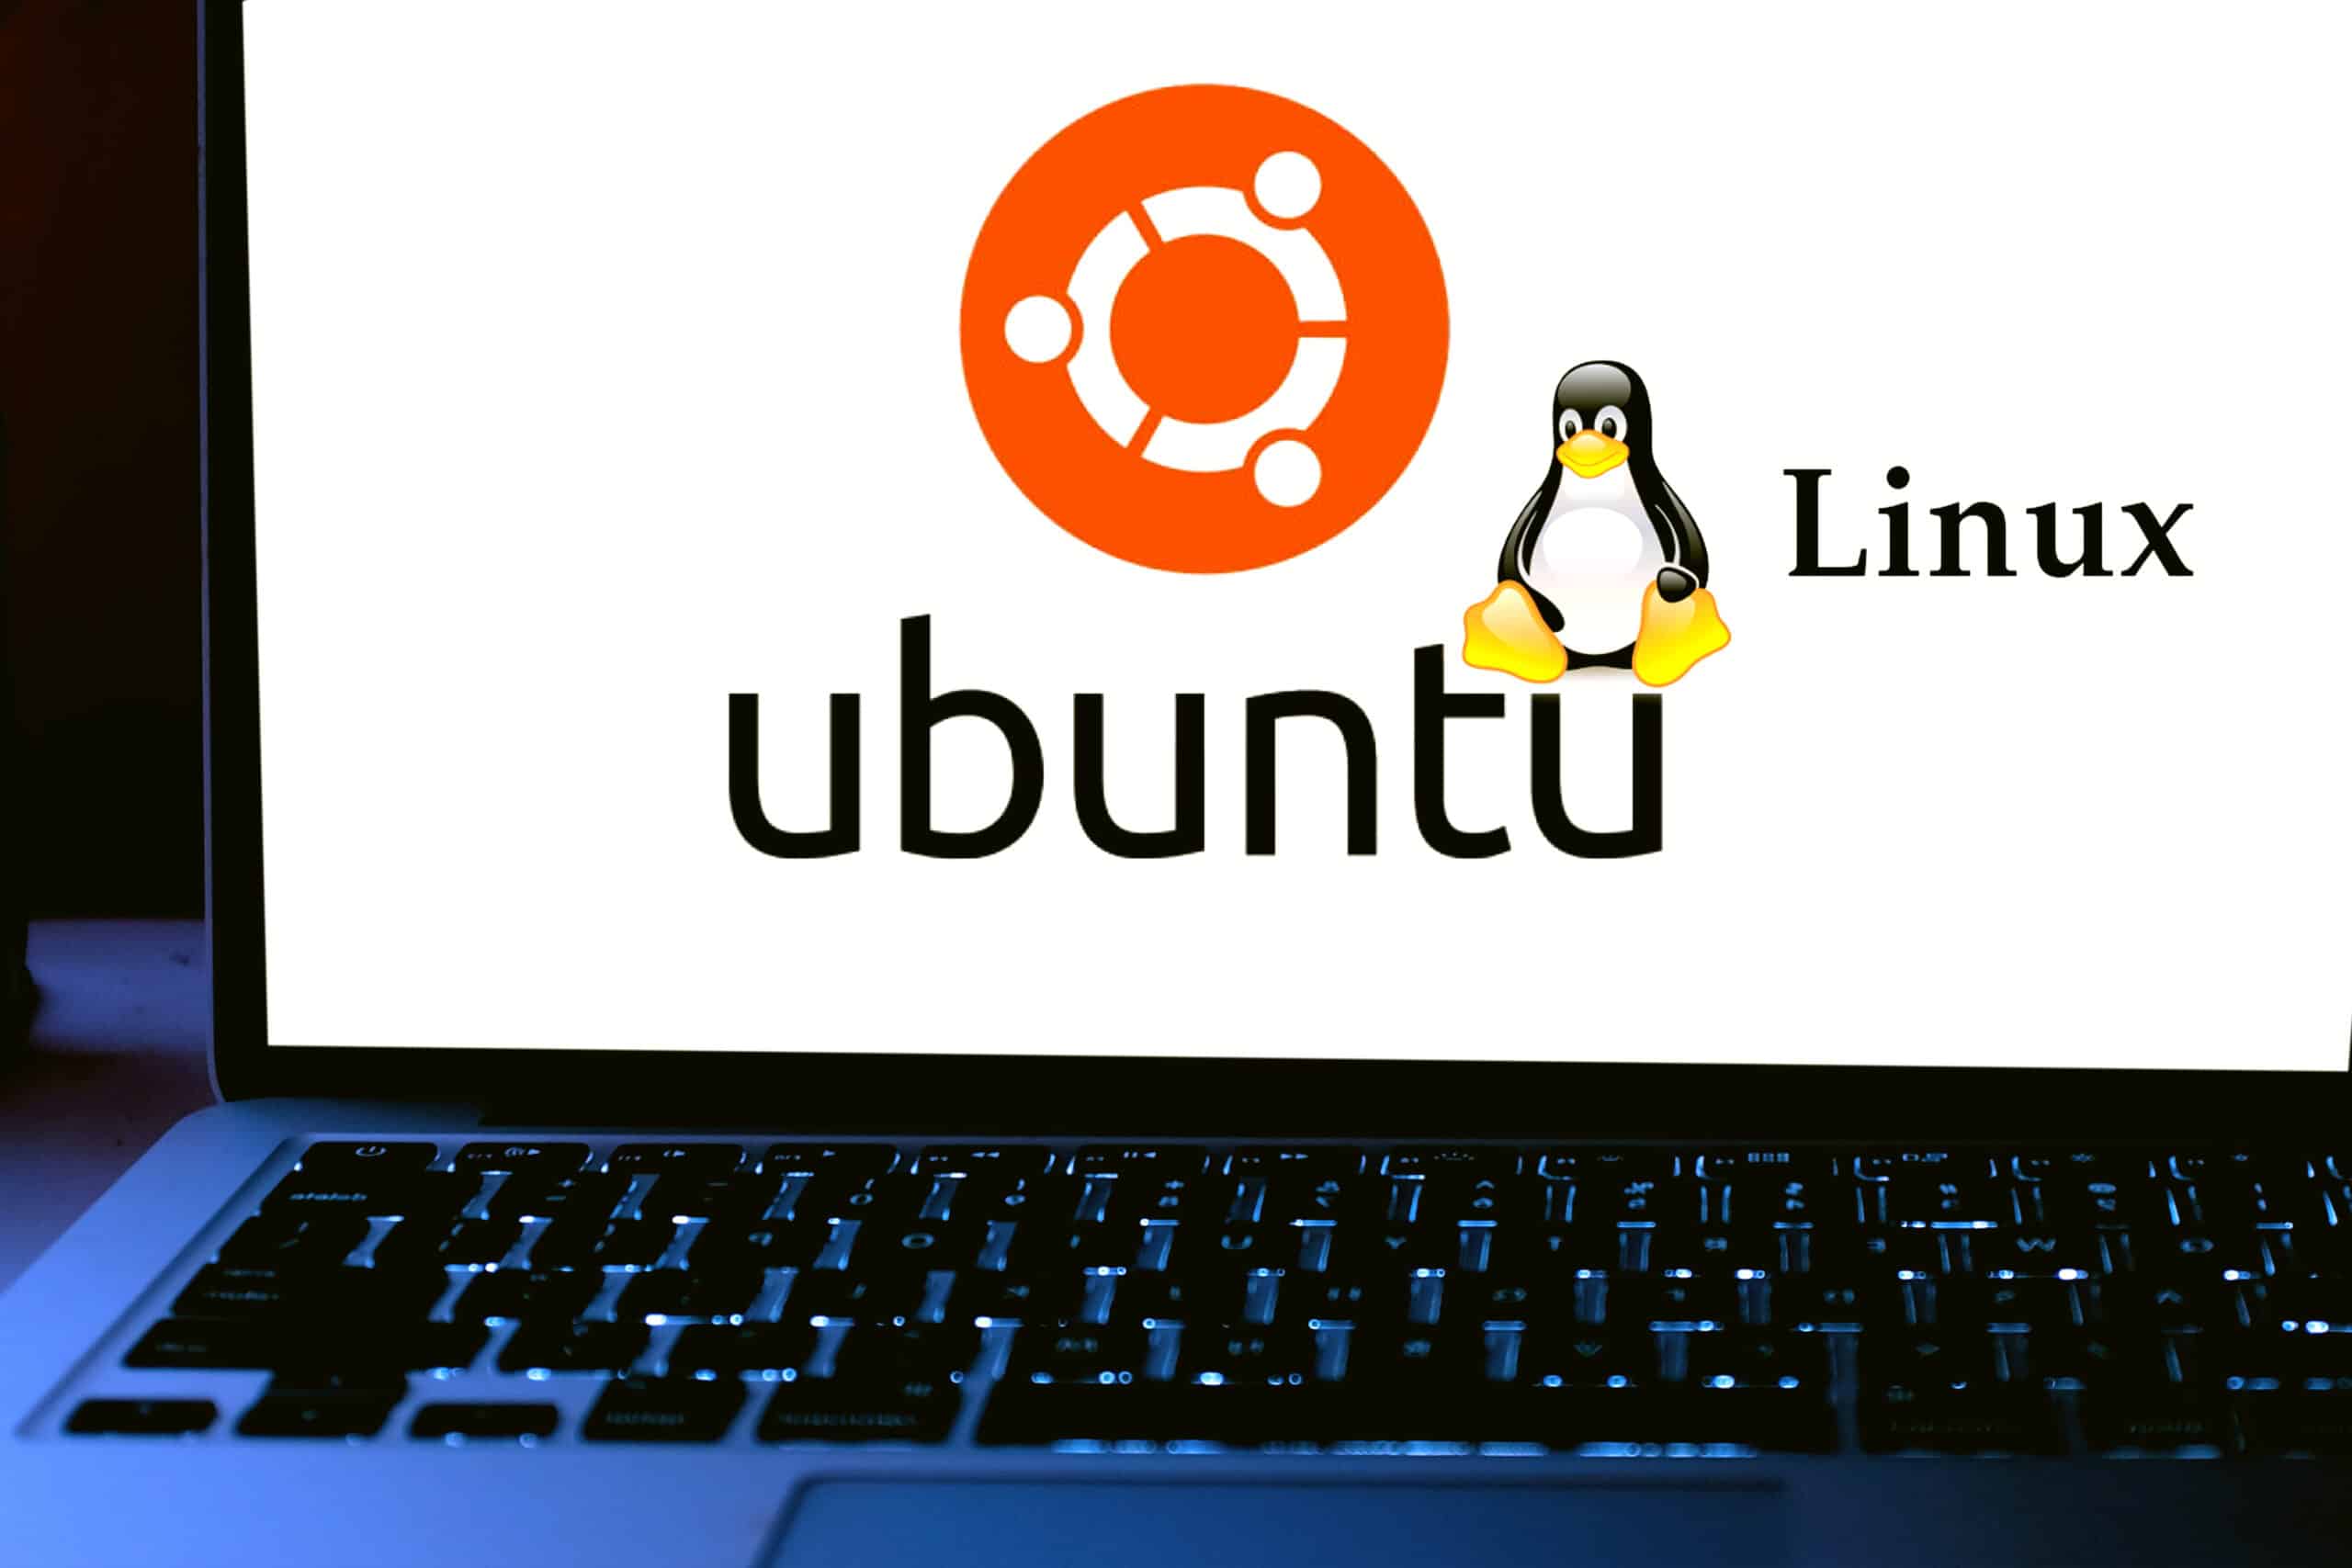 Ubuntu Linux server desktop